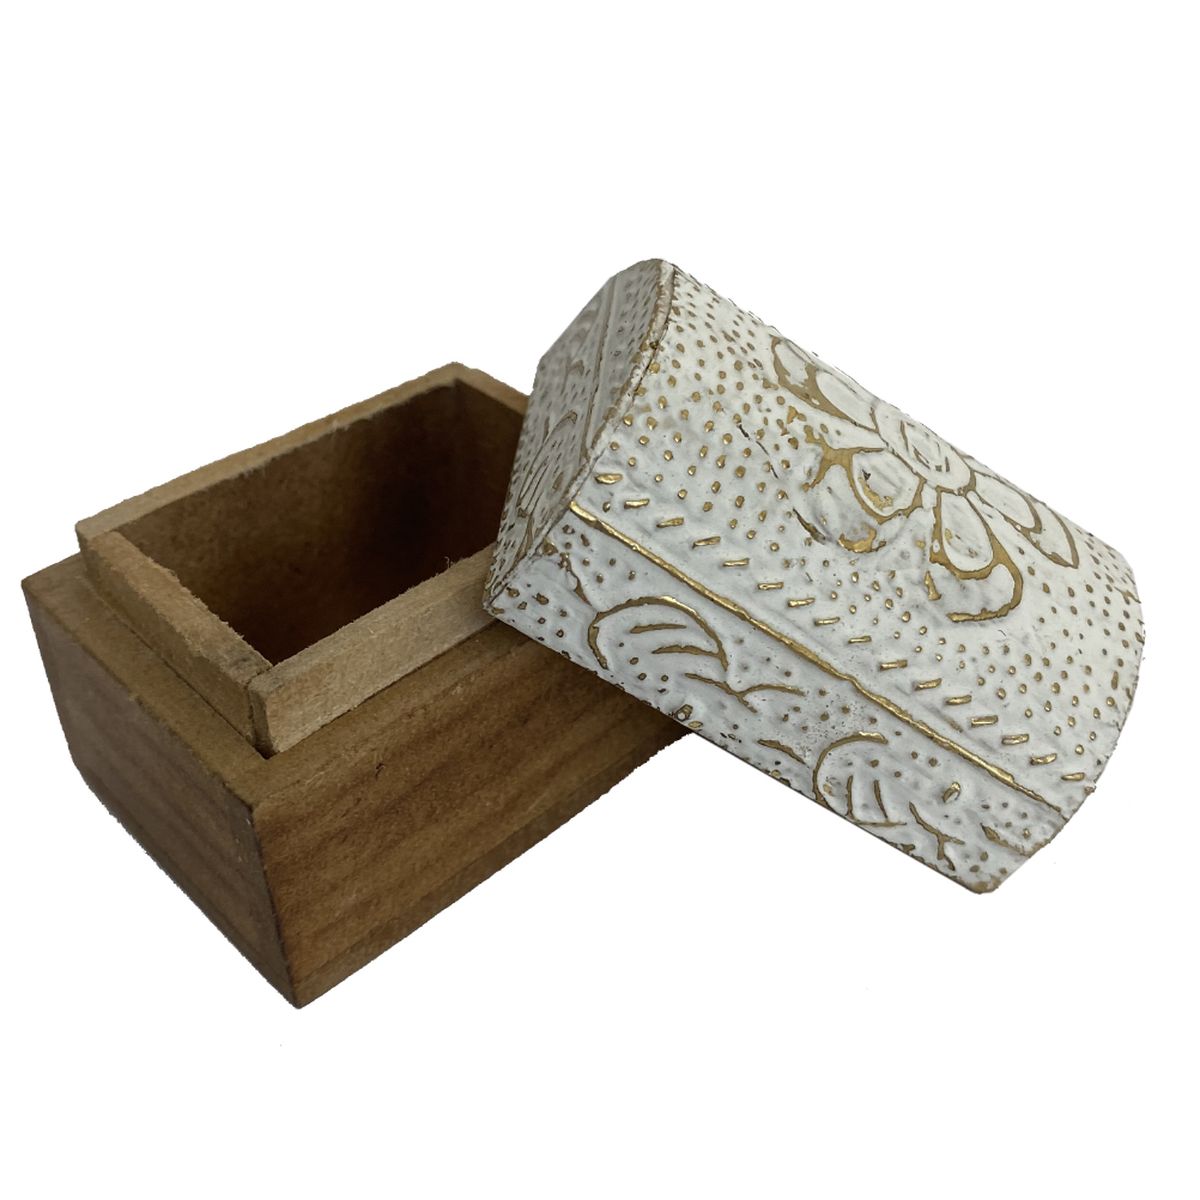 White and natural Mini wooden box